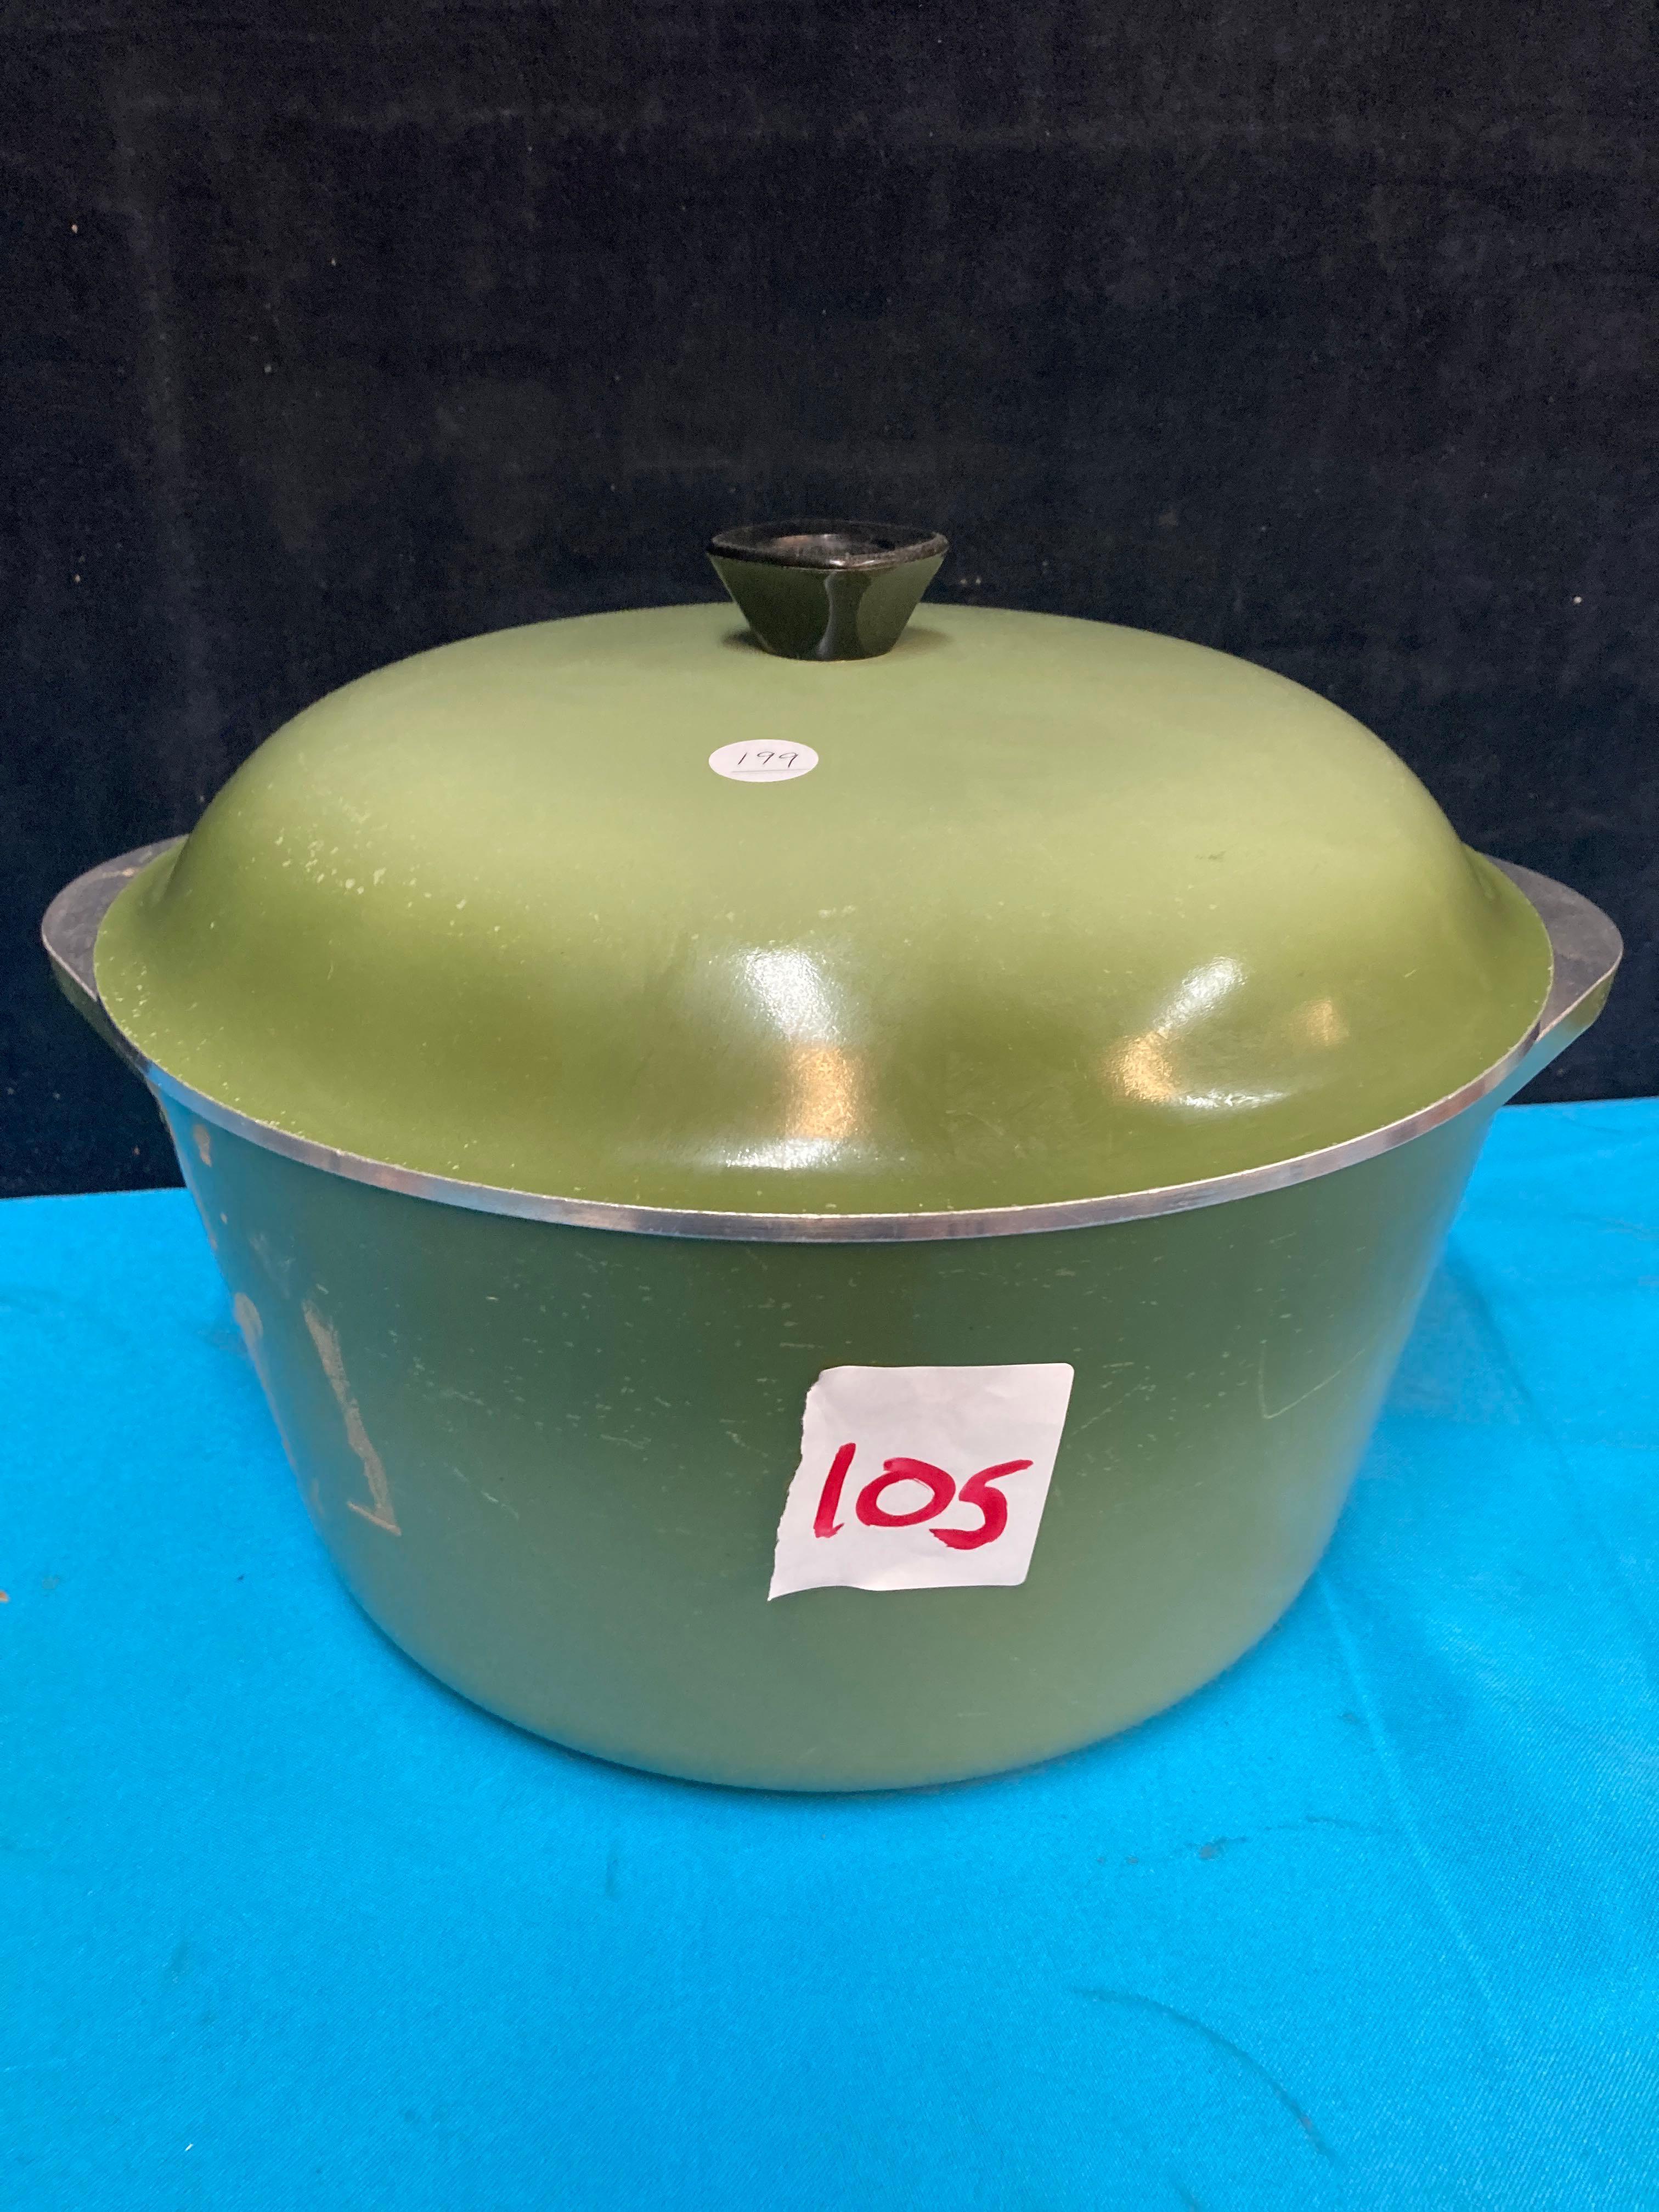 New Nordic ware Bundt pan and Club aluminum pot with lid lid